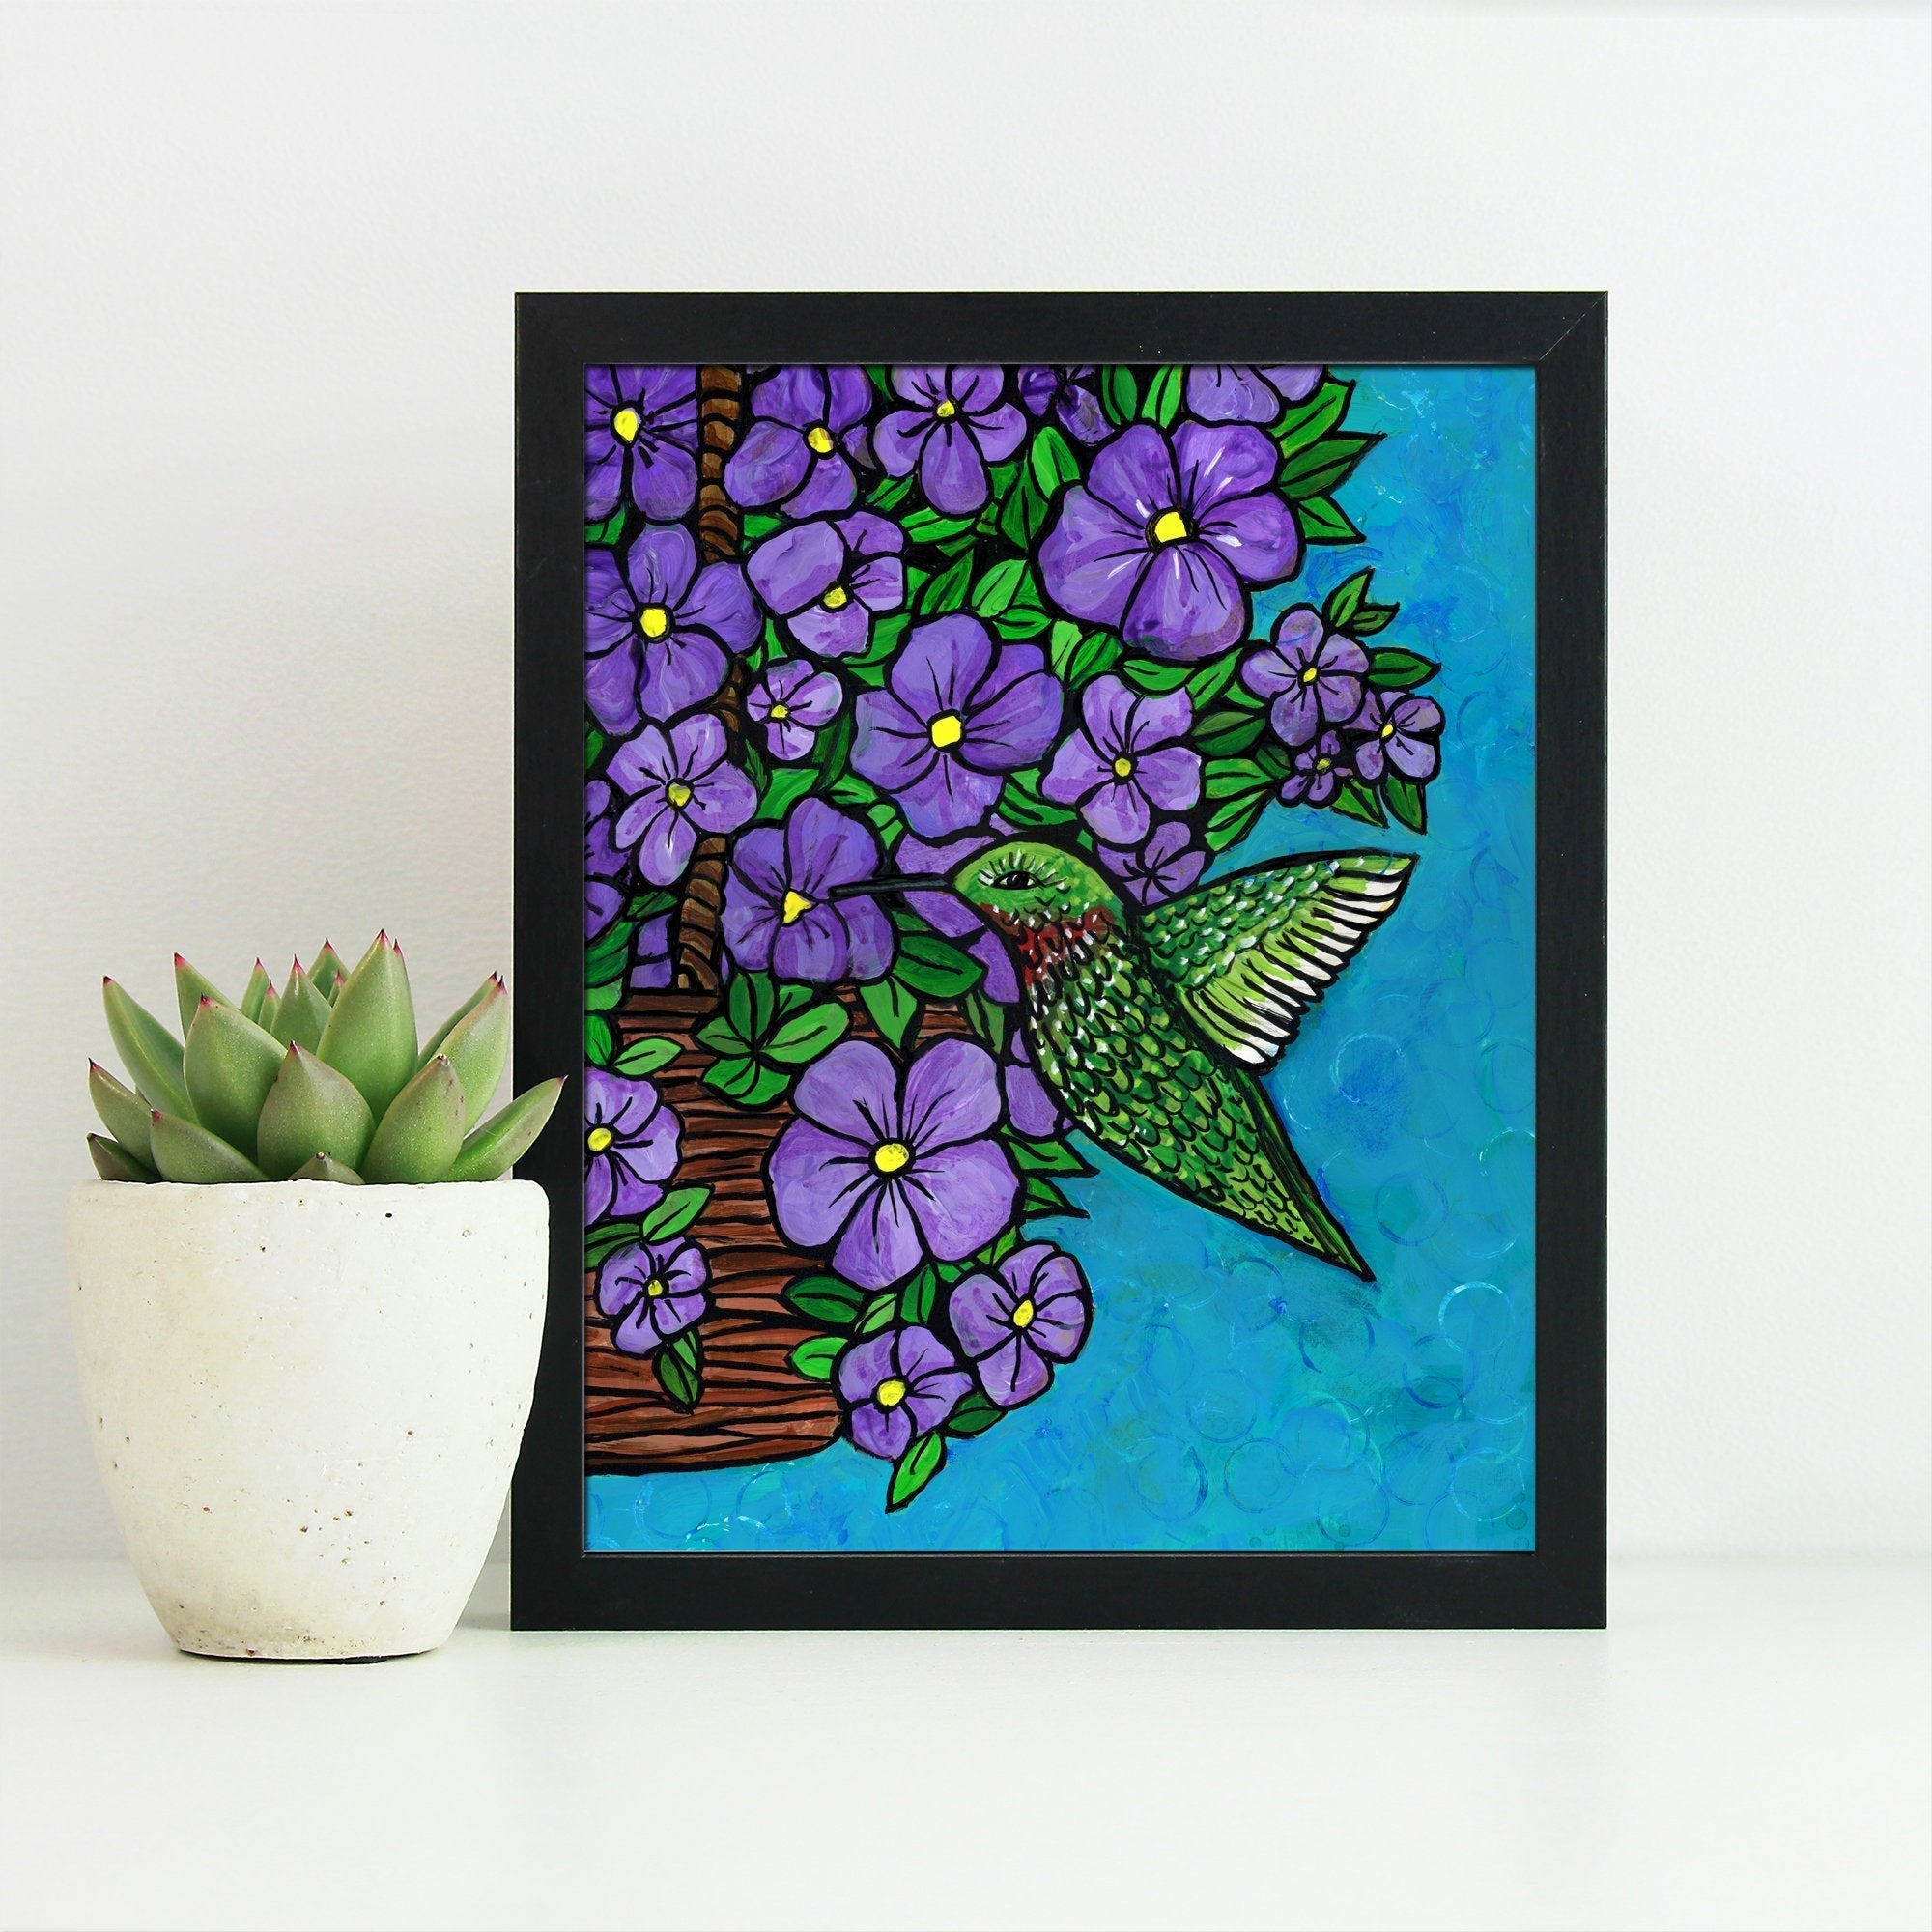 Hummingbird Art Print - Green Humming Bird with Purple Petunia Flowers - 8x10 Colorful Bird Print with Optional Black Mat - Animal Art